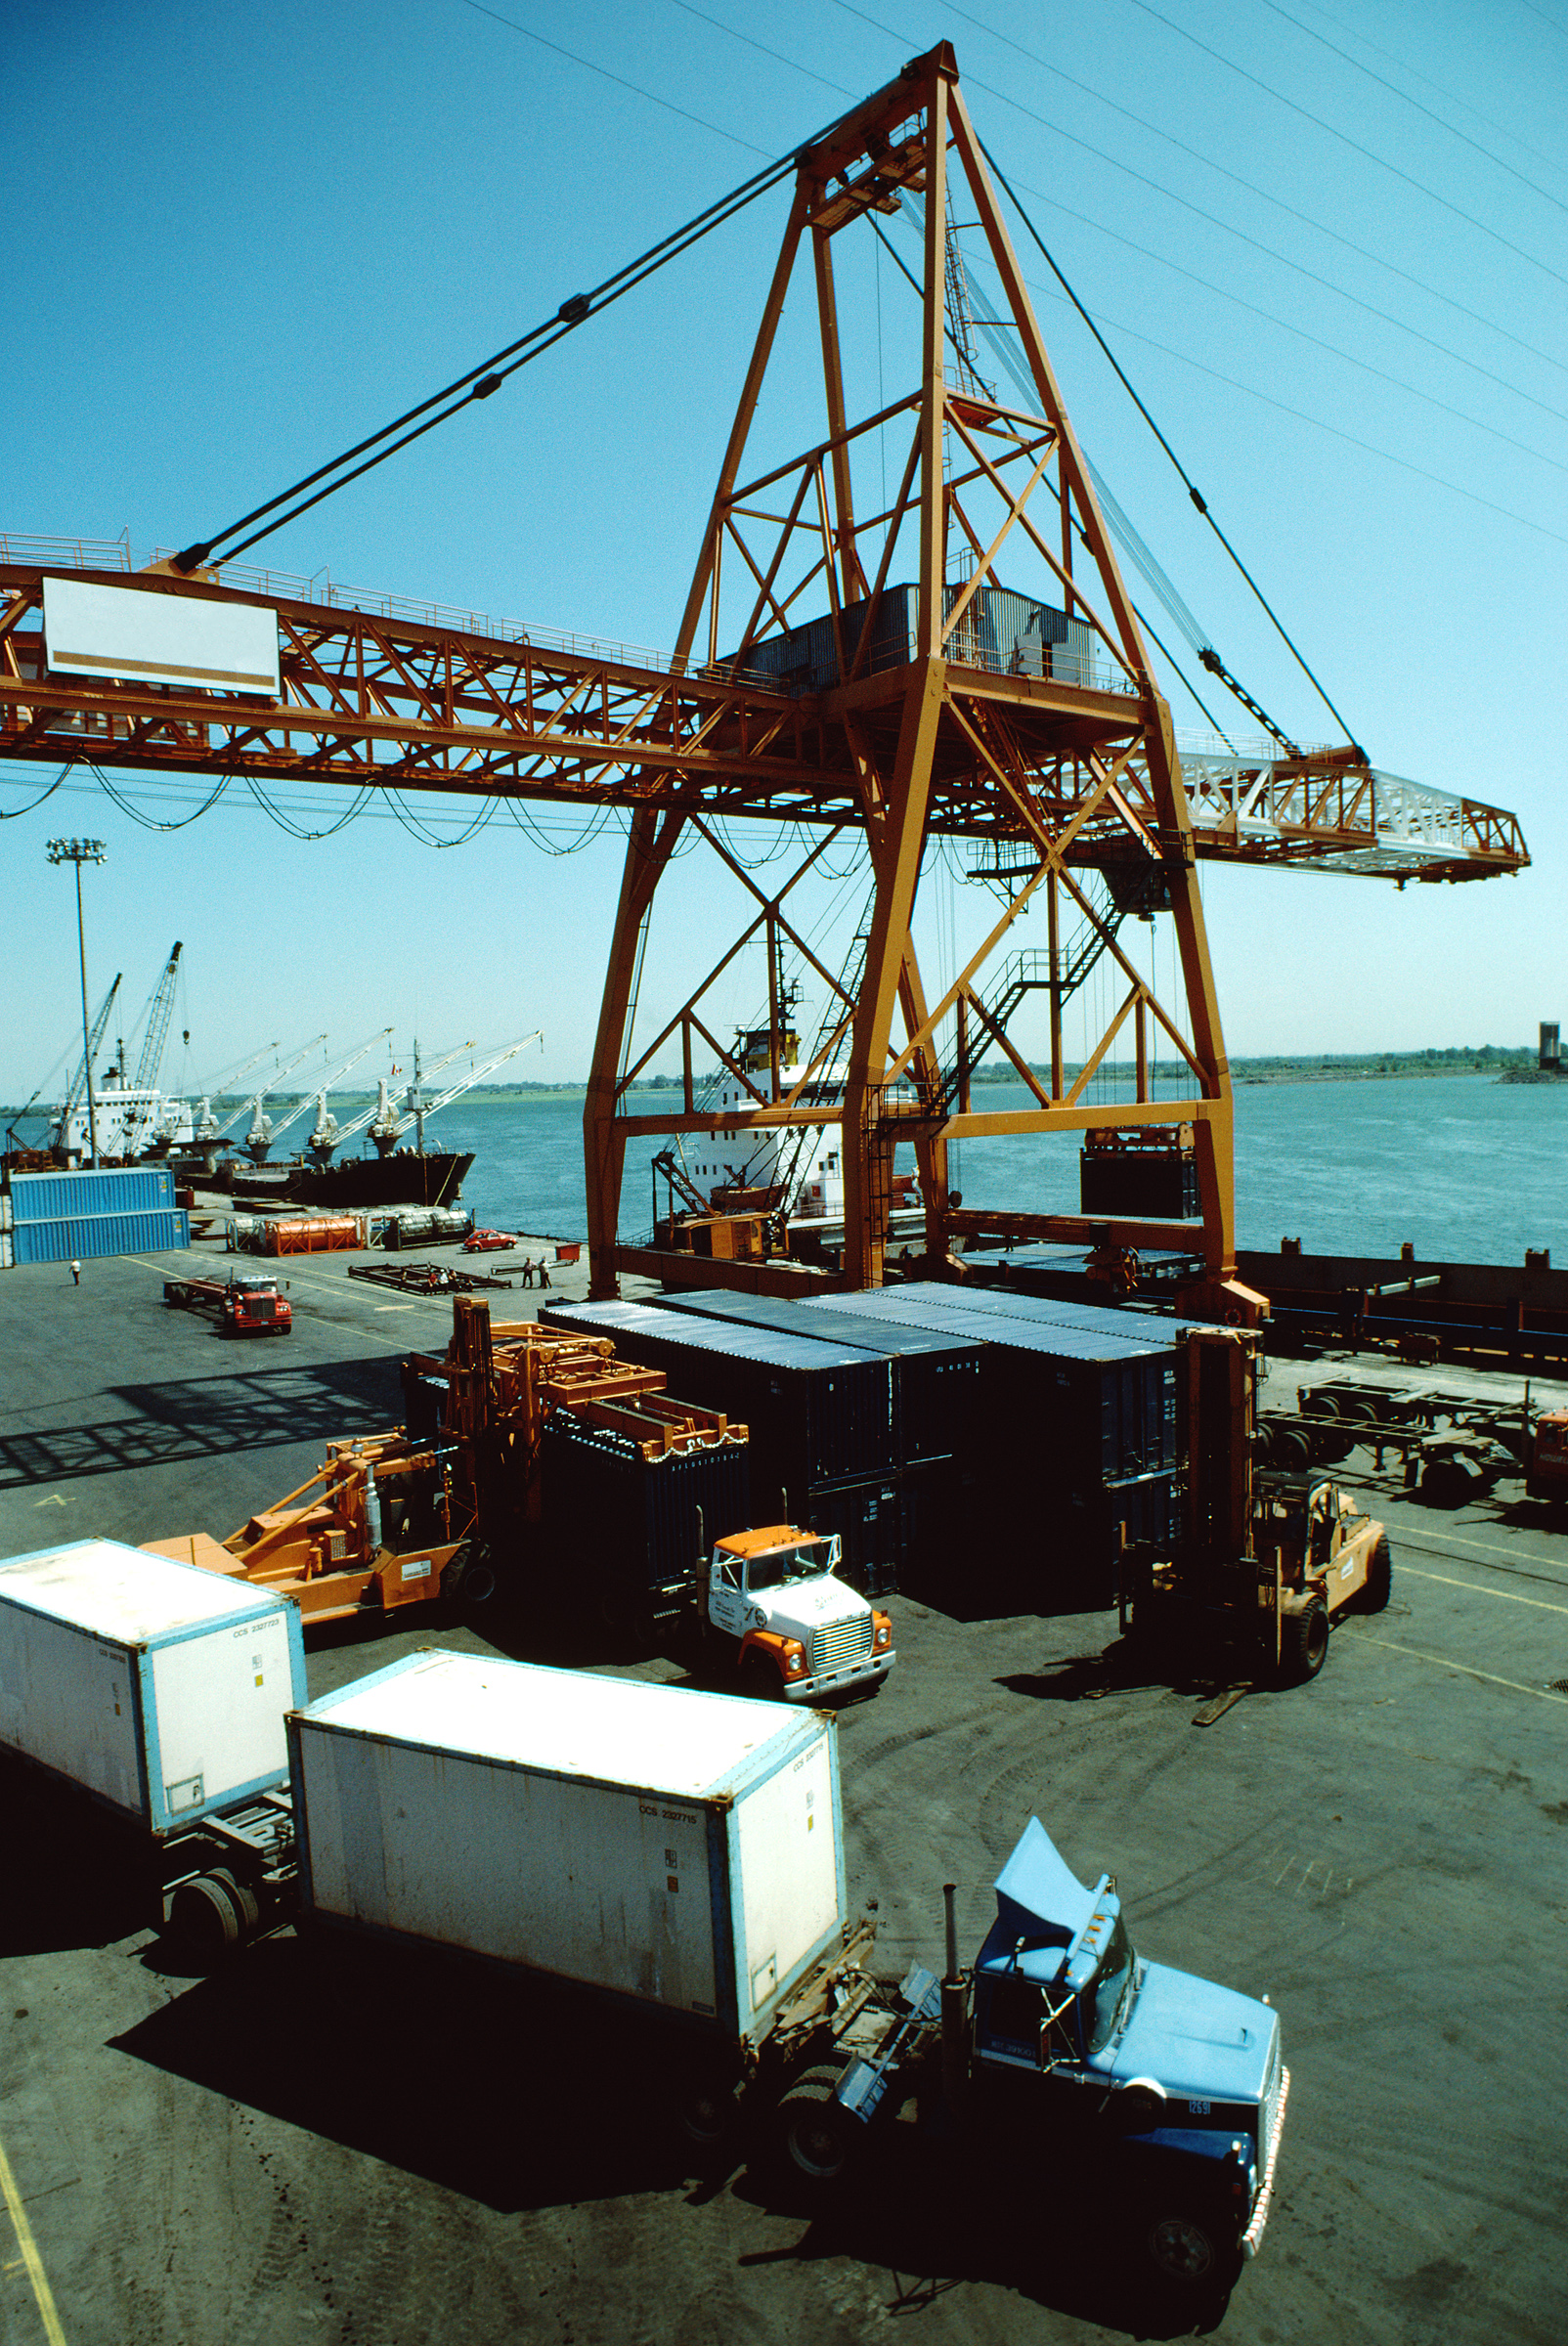 Handel am Hafen, Quelle: photos.com